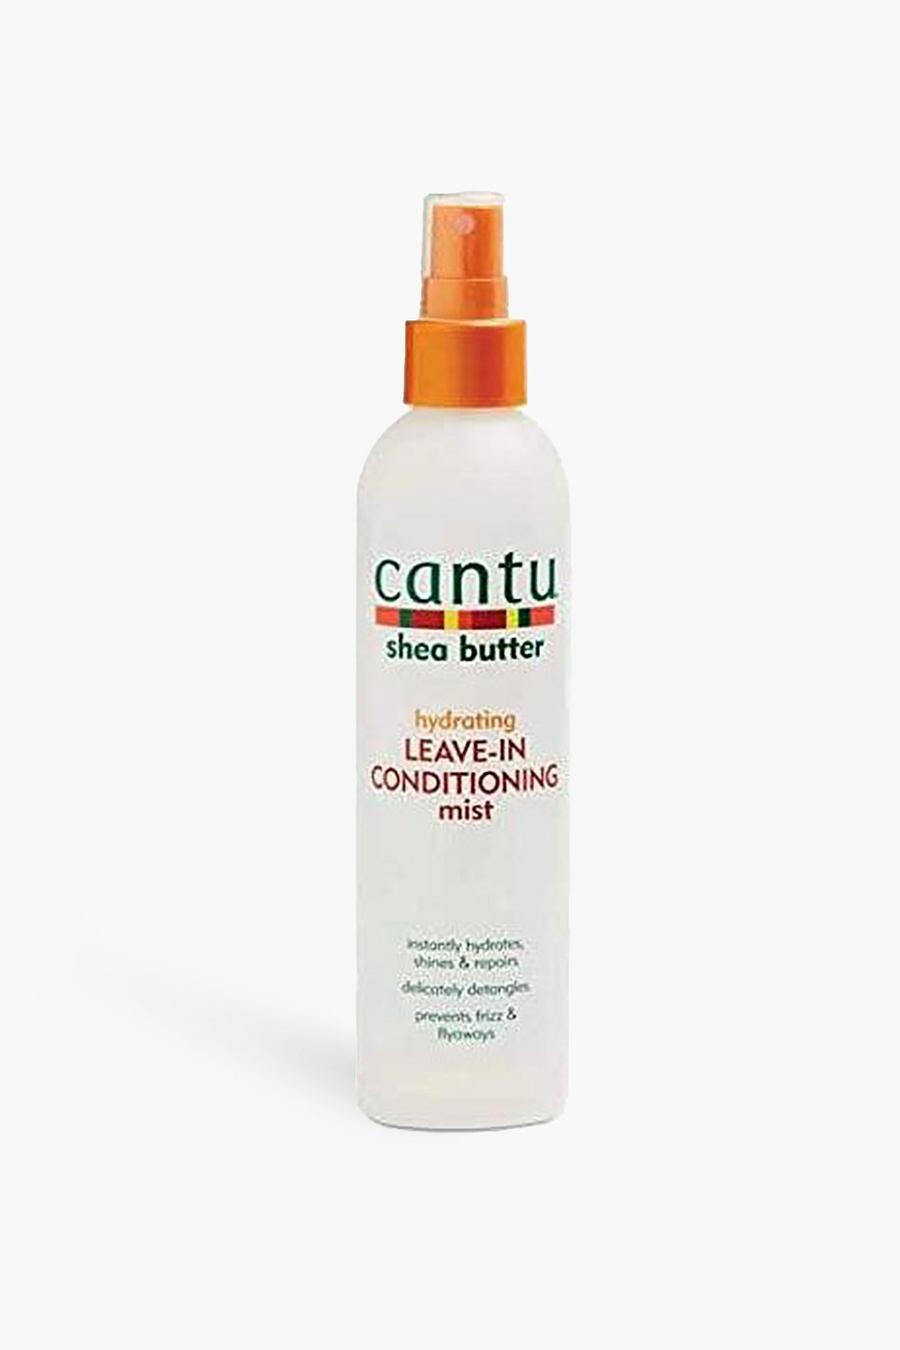 Orange CANTU LEAVE IN HAIR CONDITIONING MIST